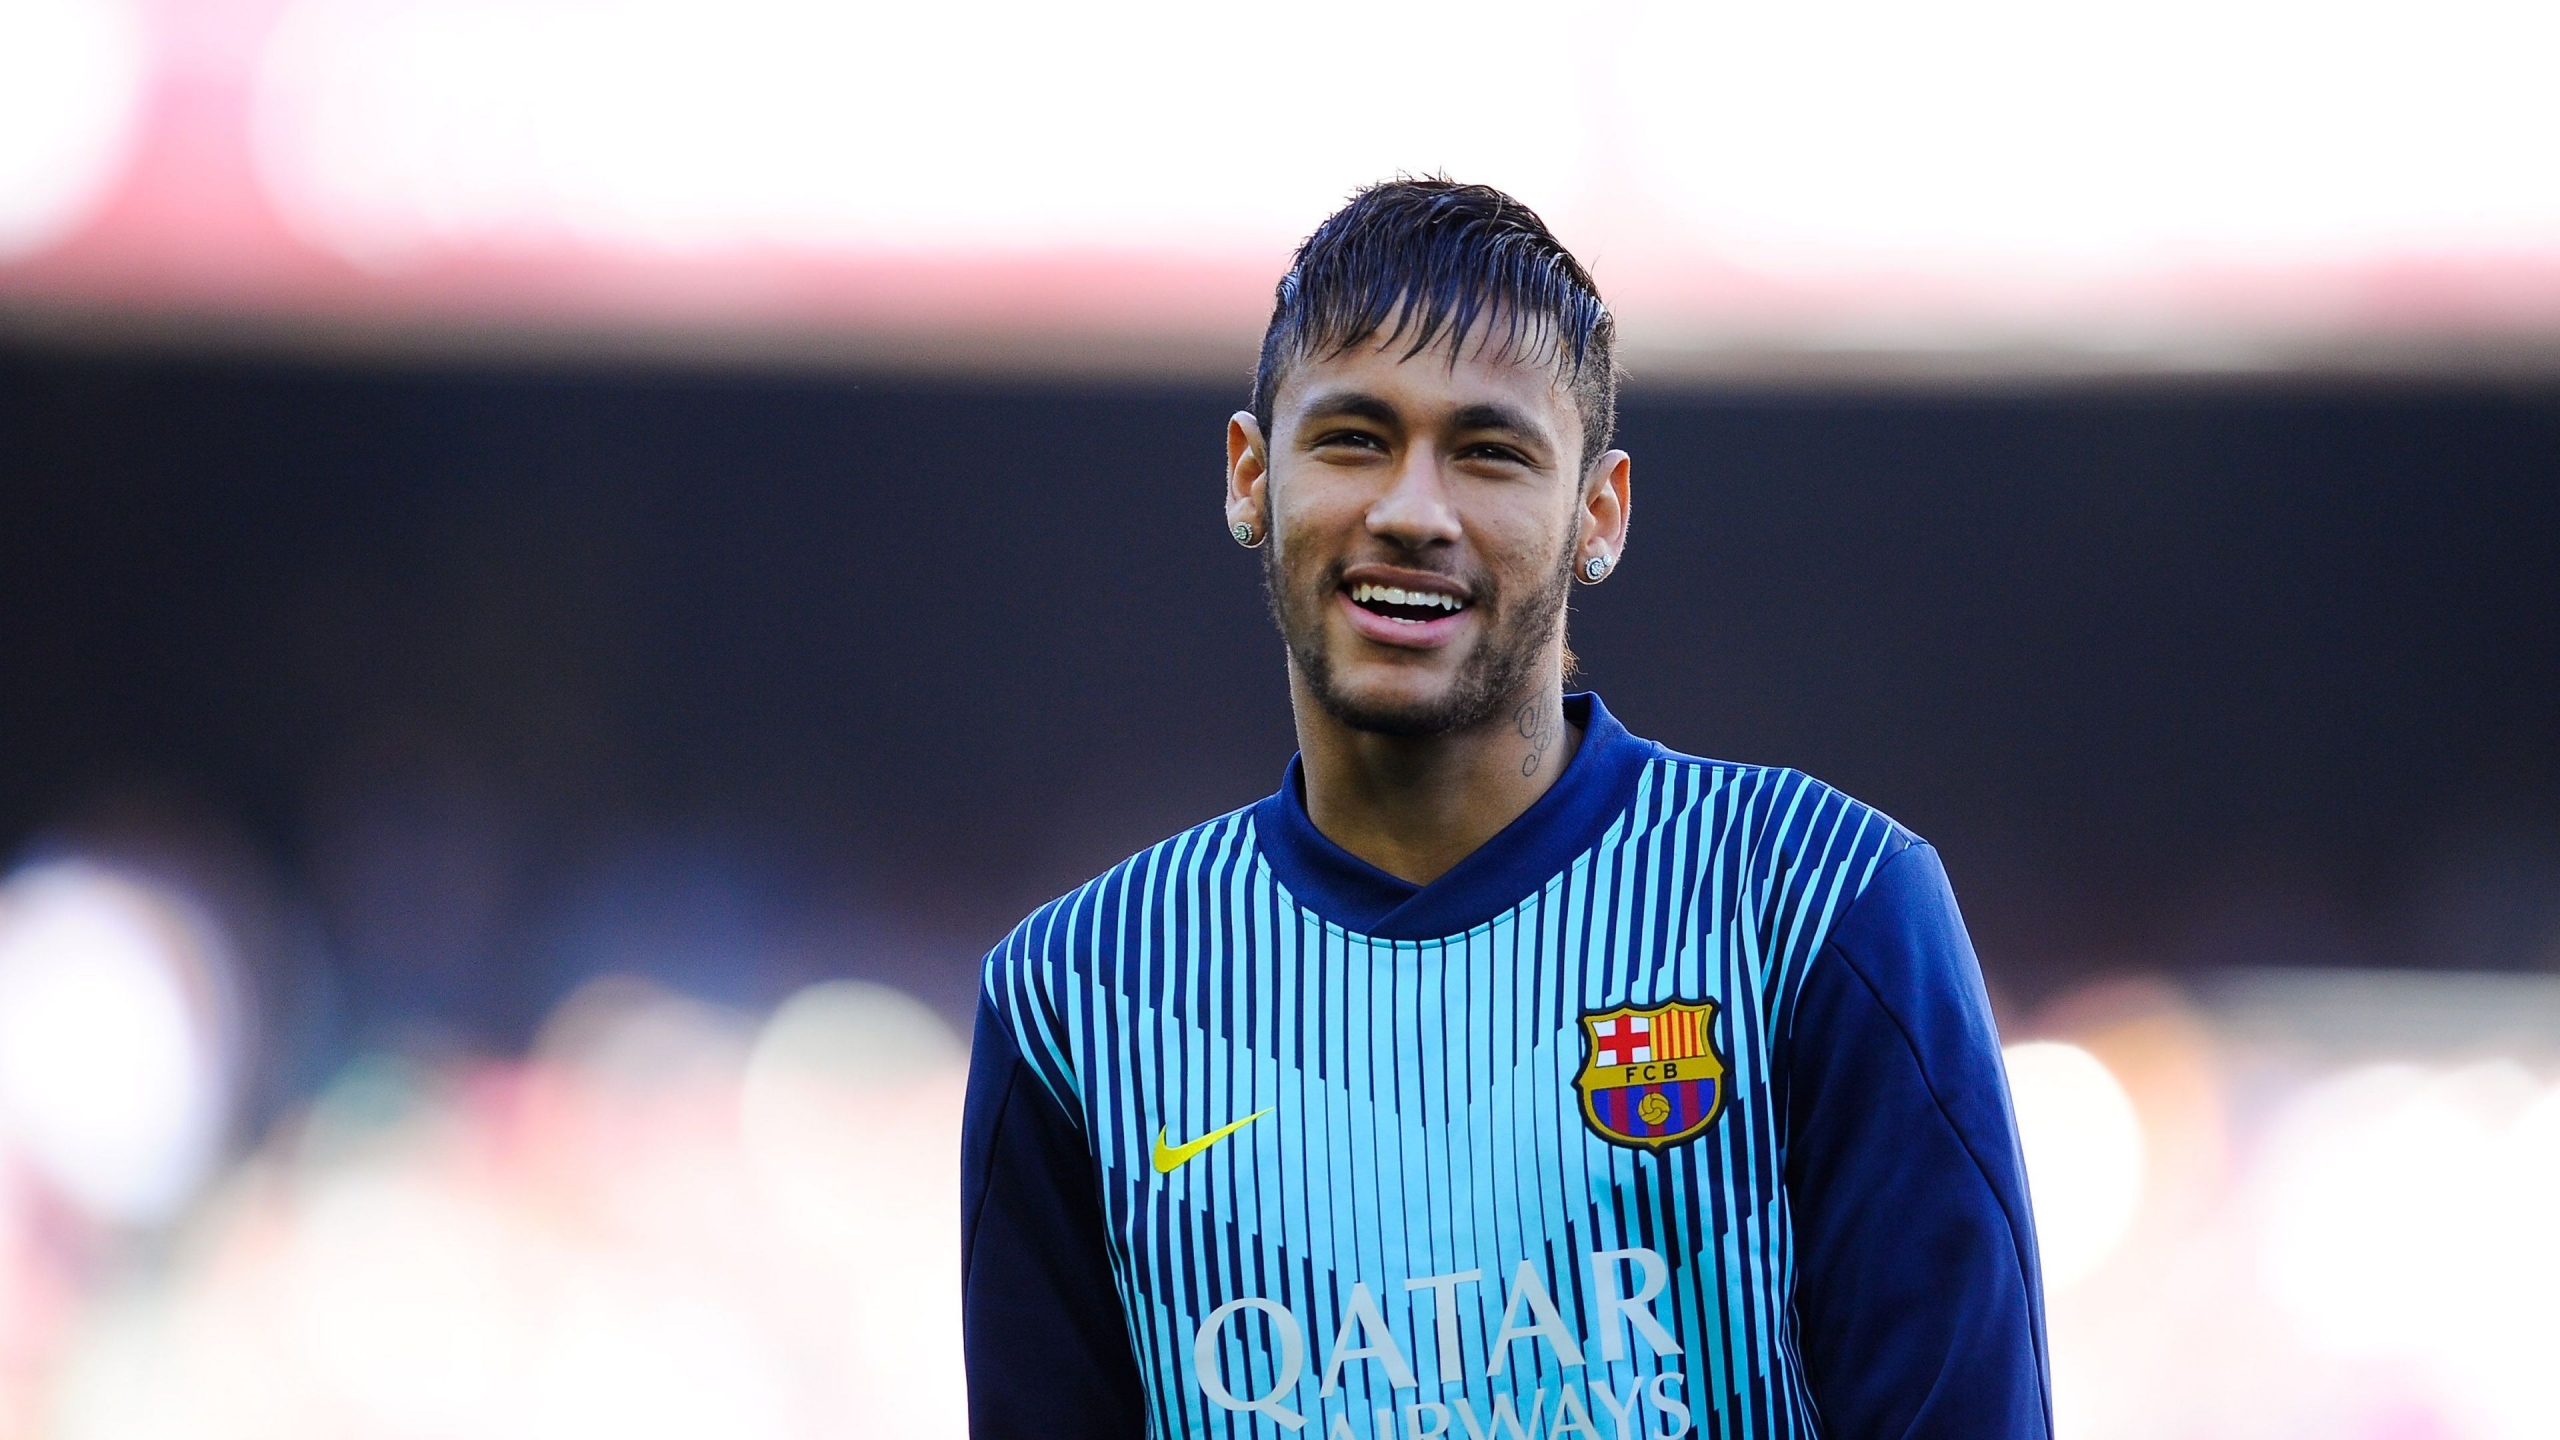 Neymar Training for 2560x1440 HDTV resolution